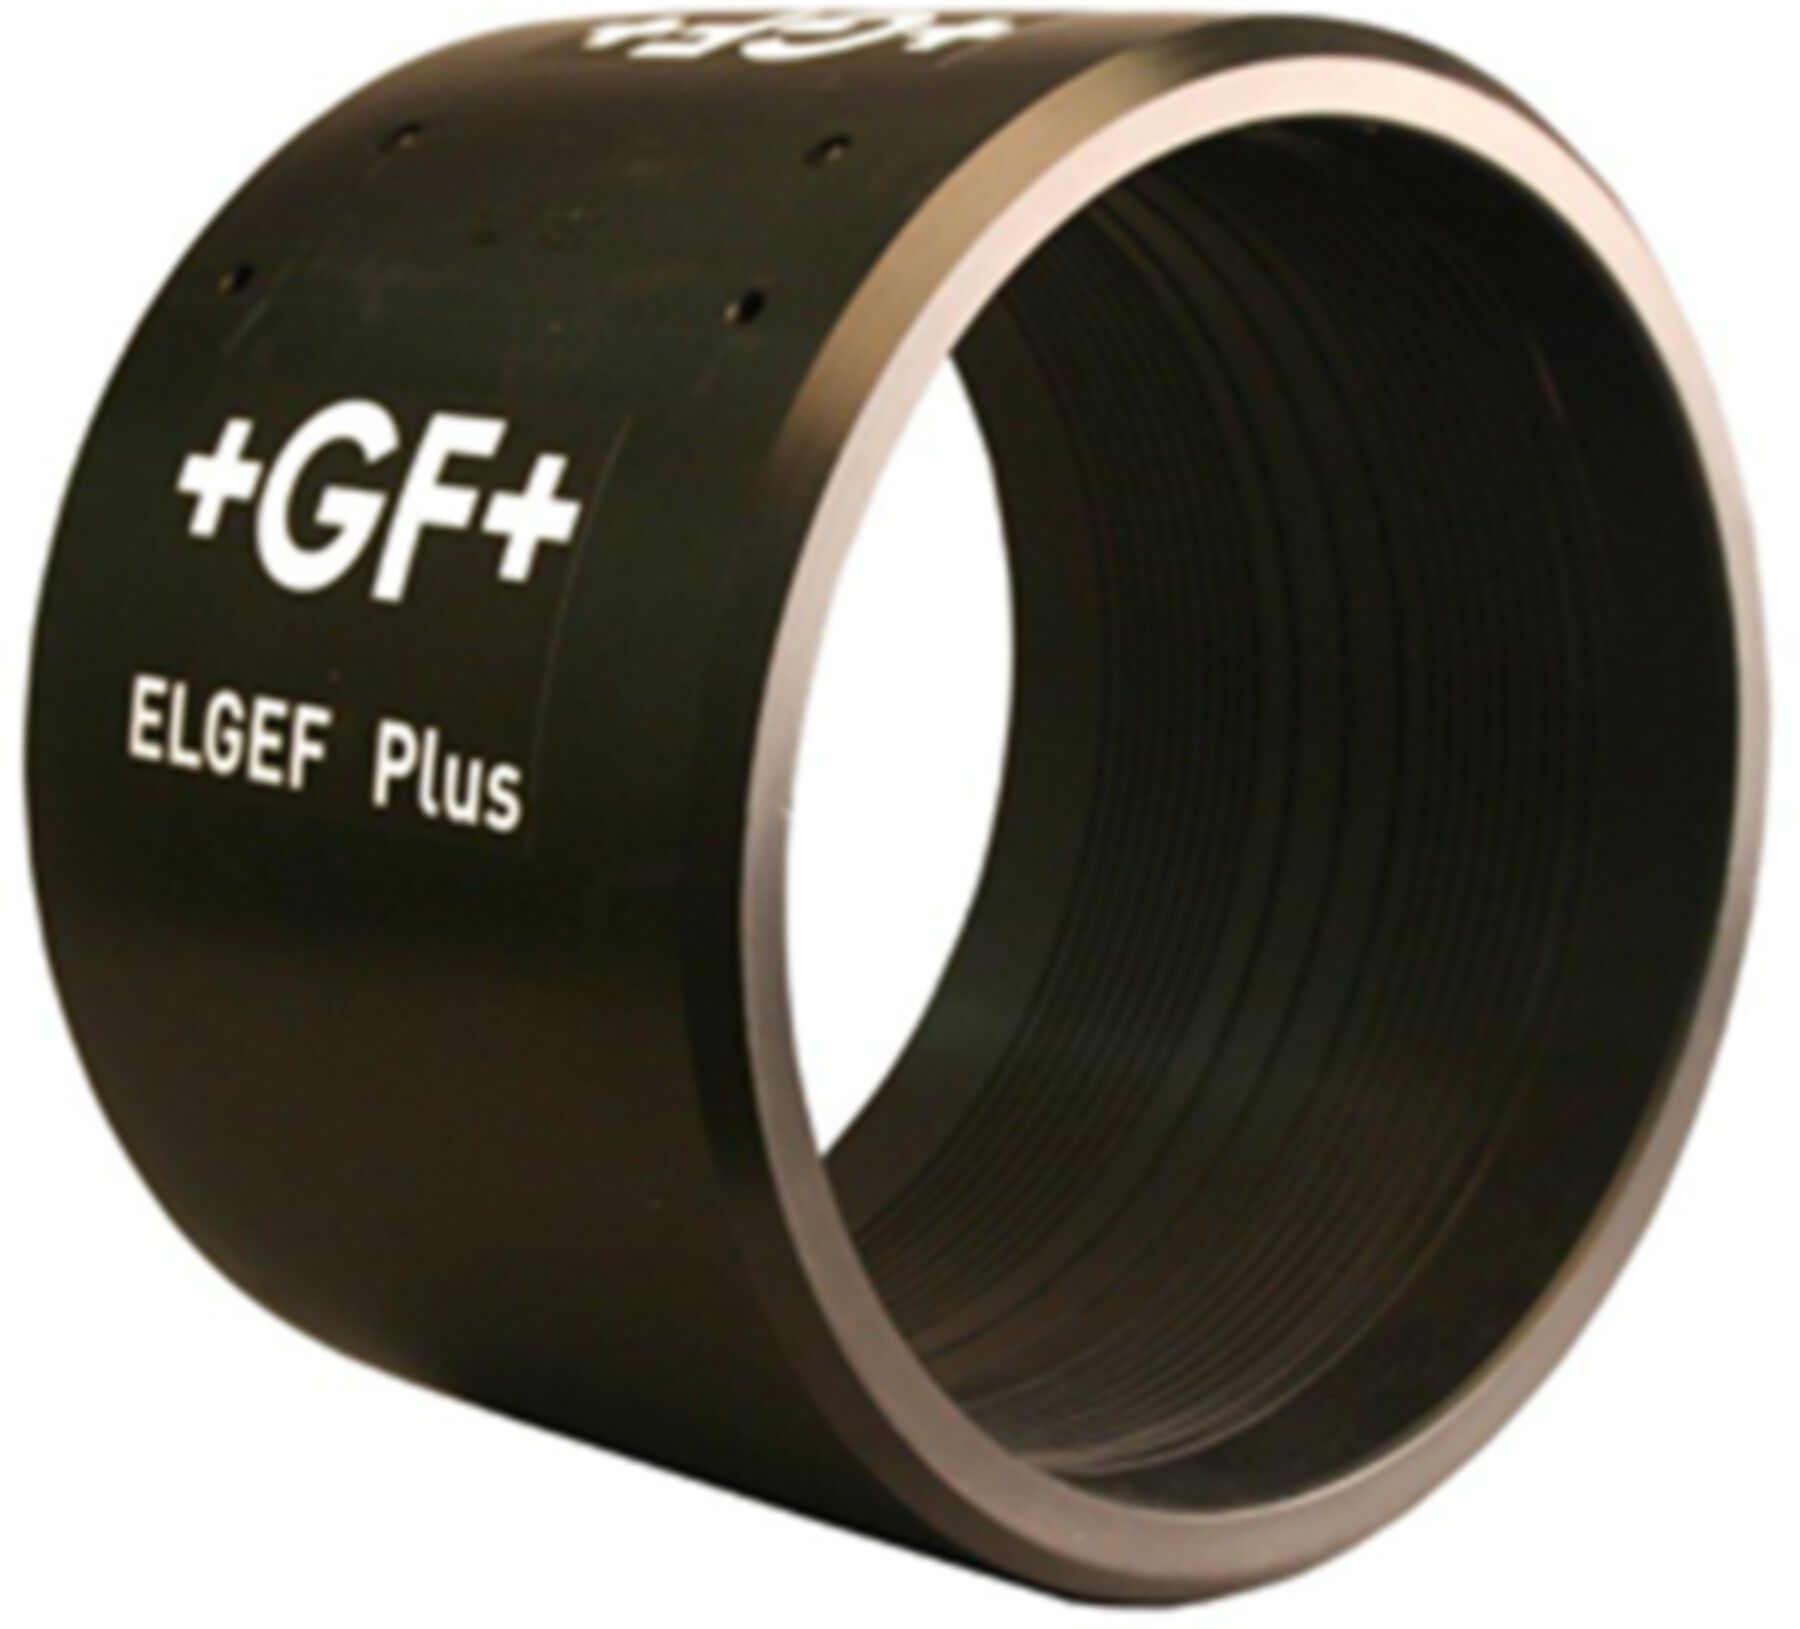 ELGEF Muffe PN 16 d 200mm 753 911 619 - ELGEF Plus Elektroschweissfittinge